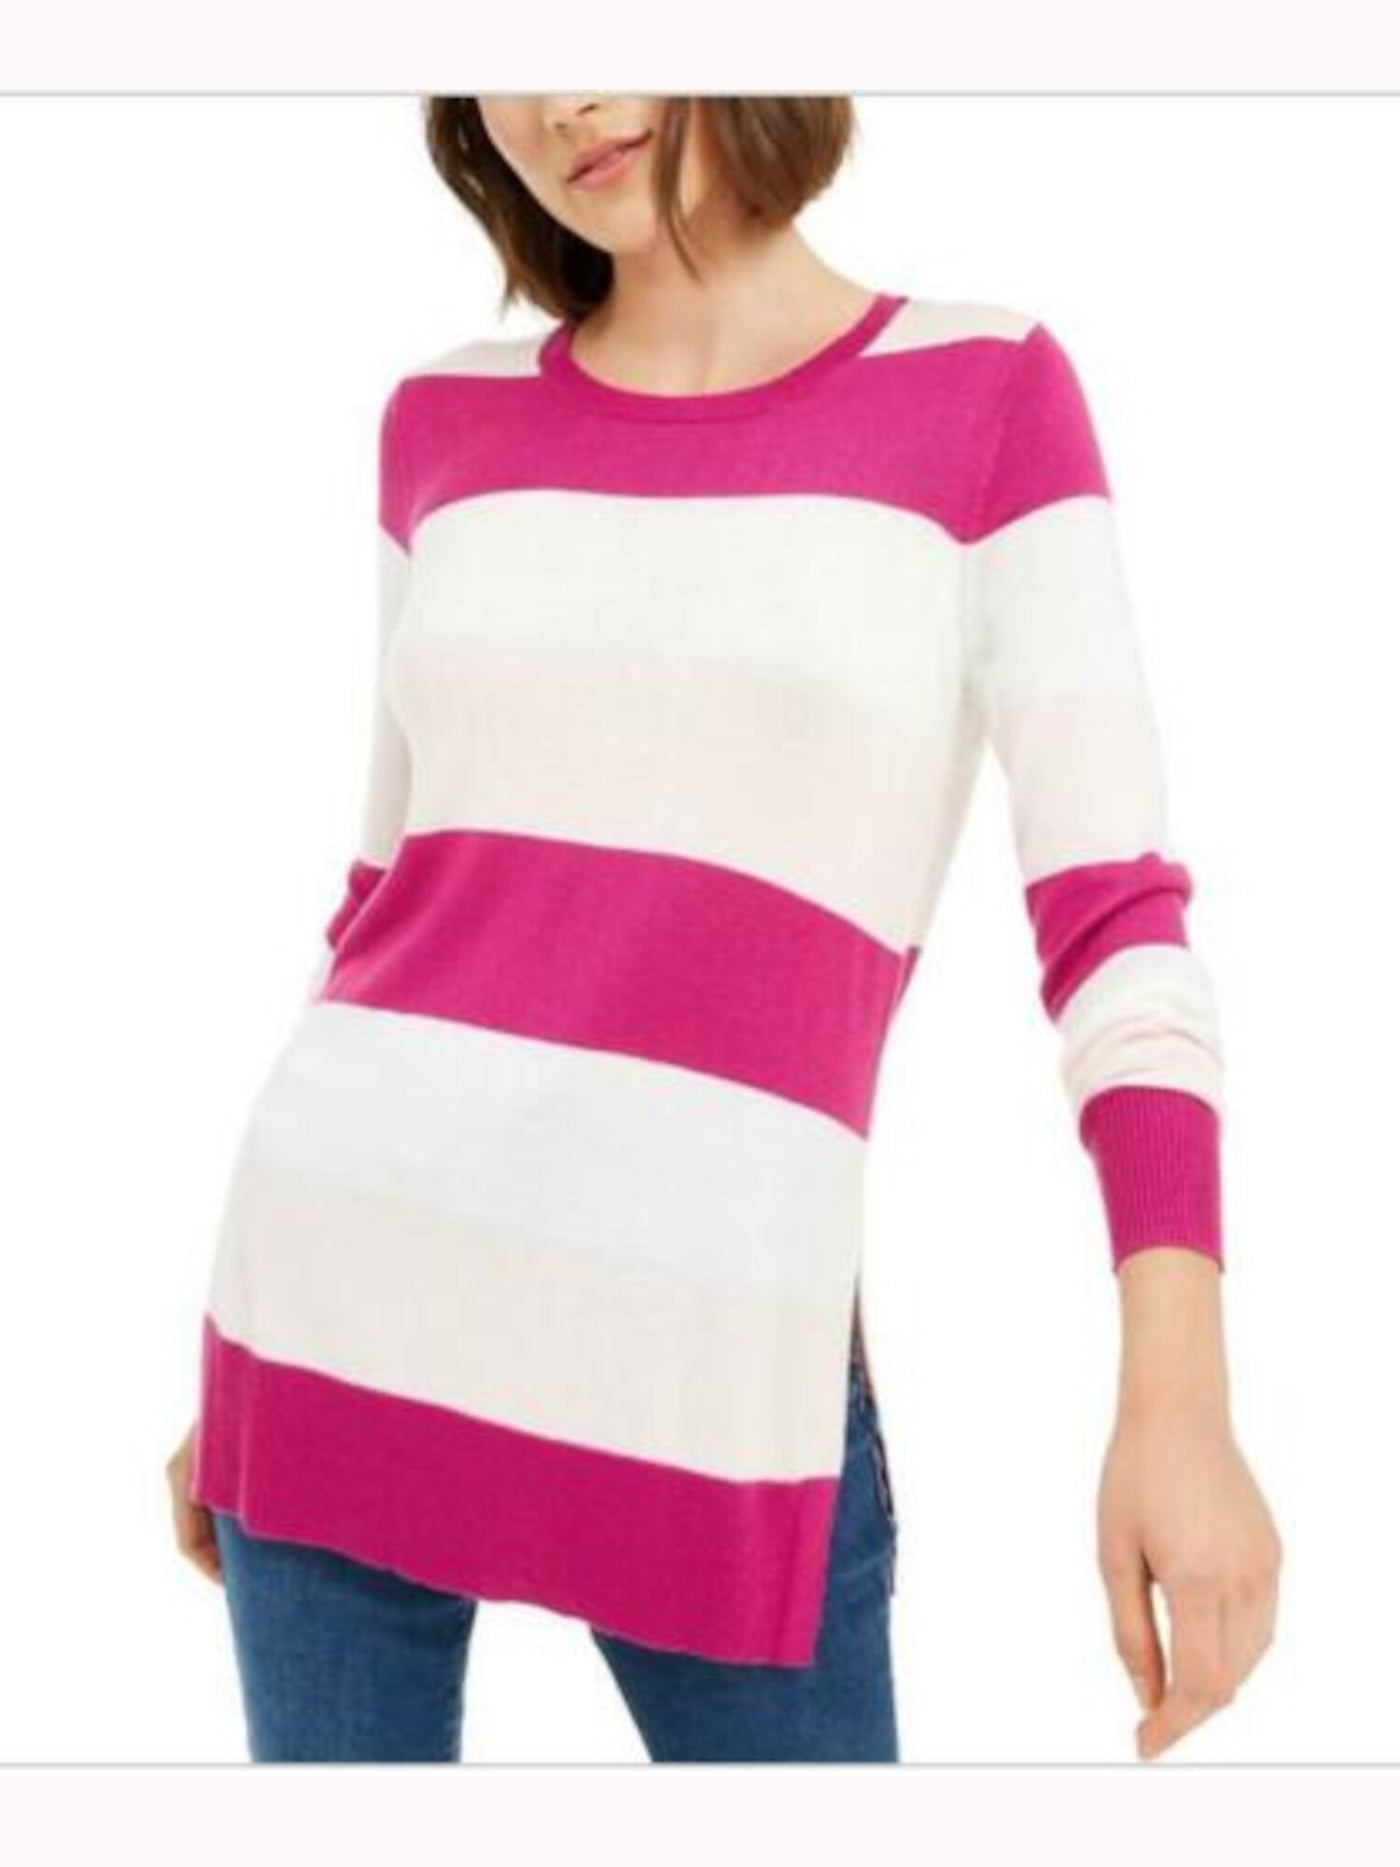 MAISON JULES Womens Pink Color Block Long Sleeve Jewel Neck T-Shirt S